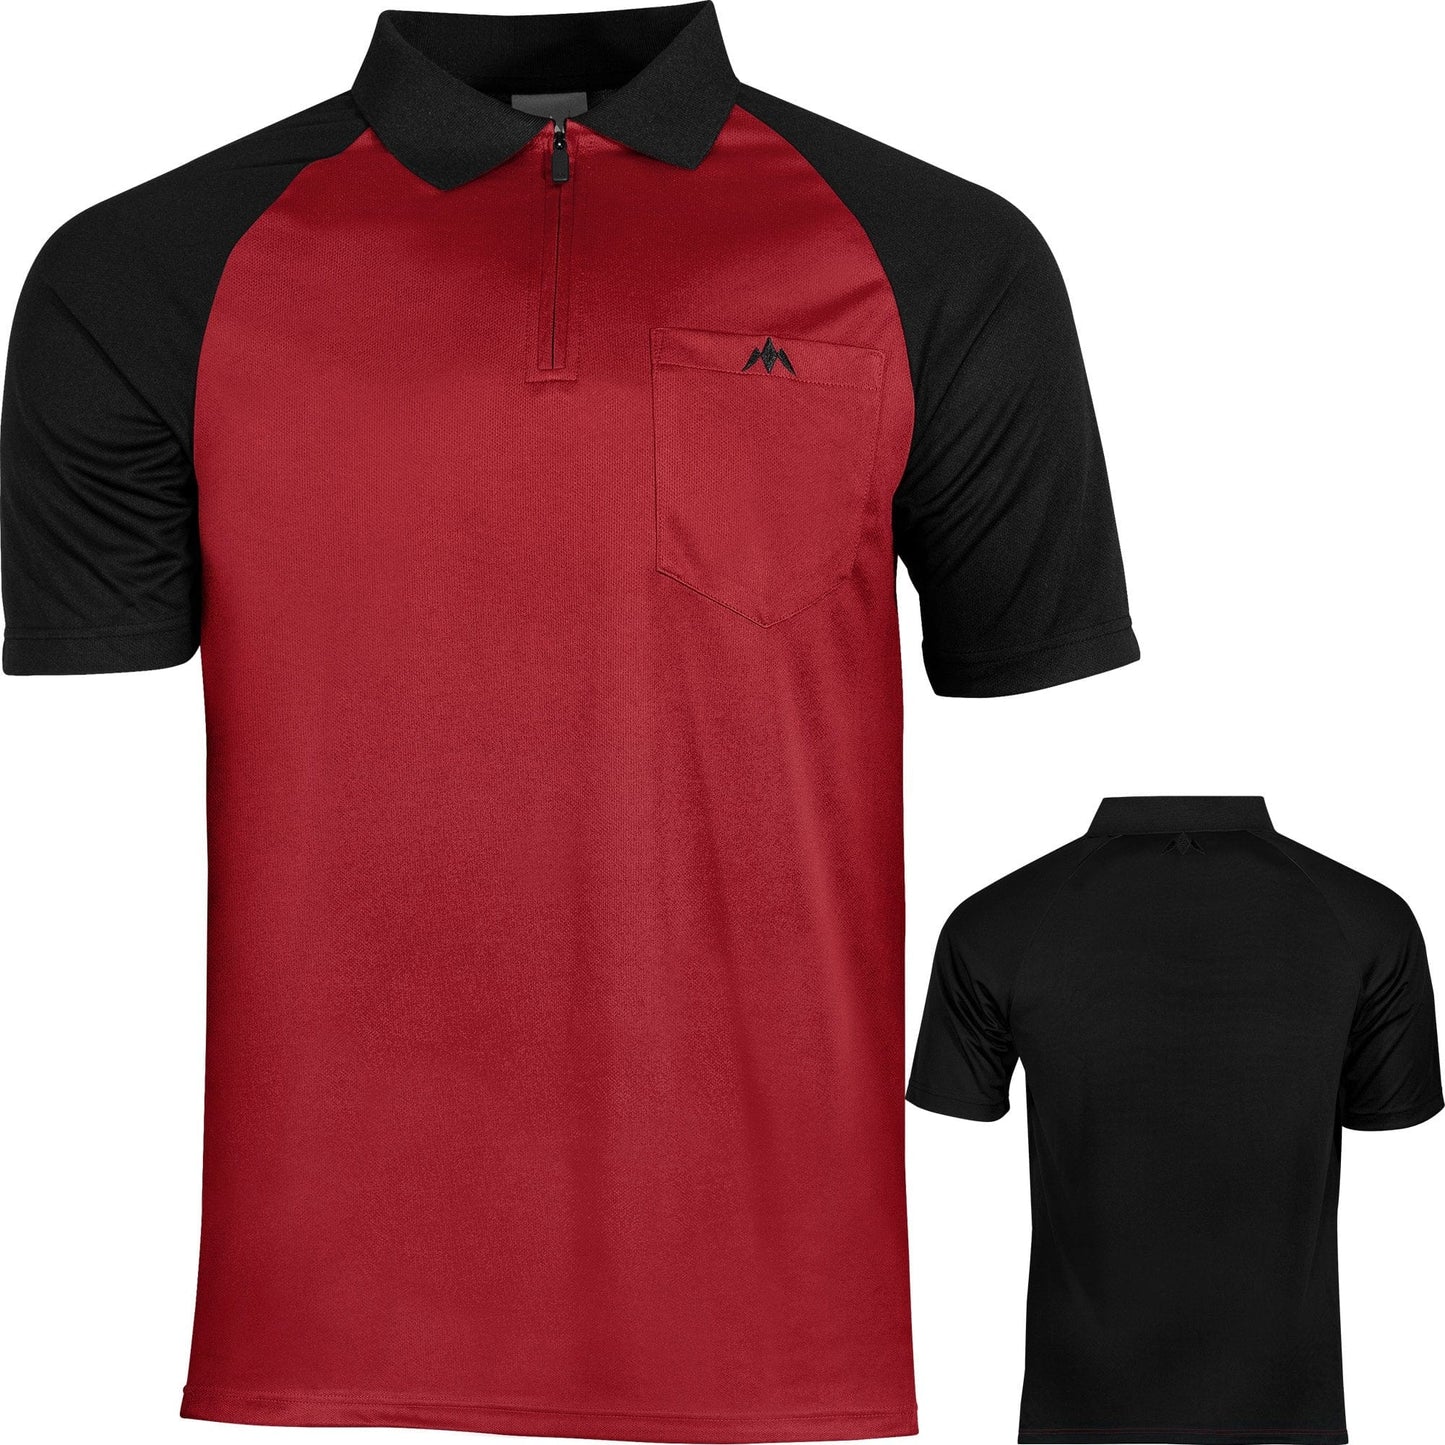 Mission Darts EXOS Cool FX Dart Shirt - Black & Red 2XL